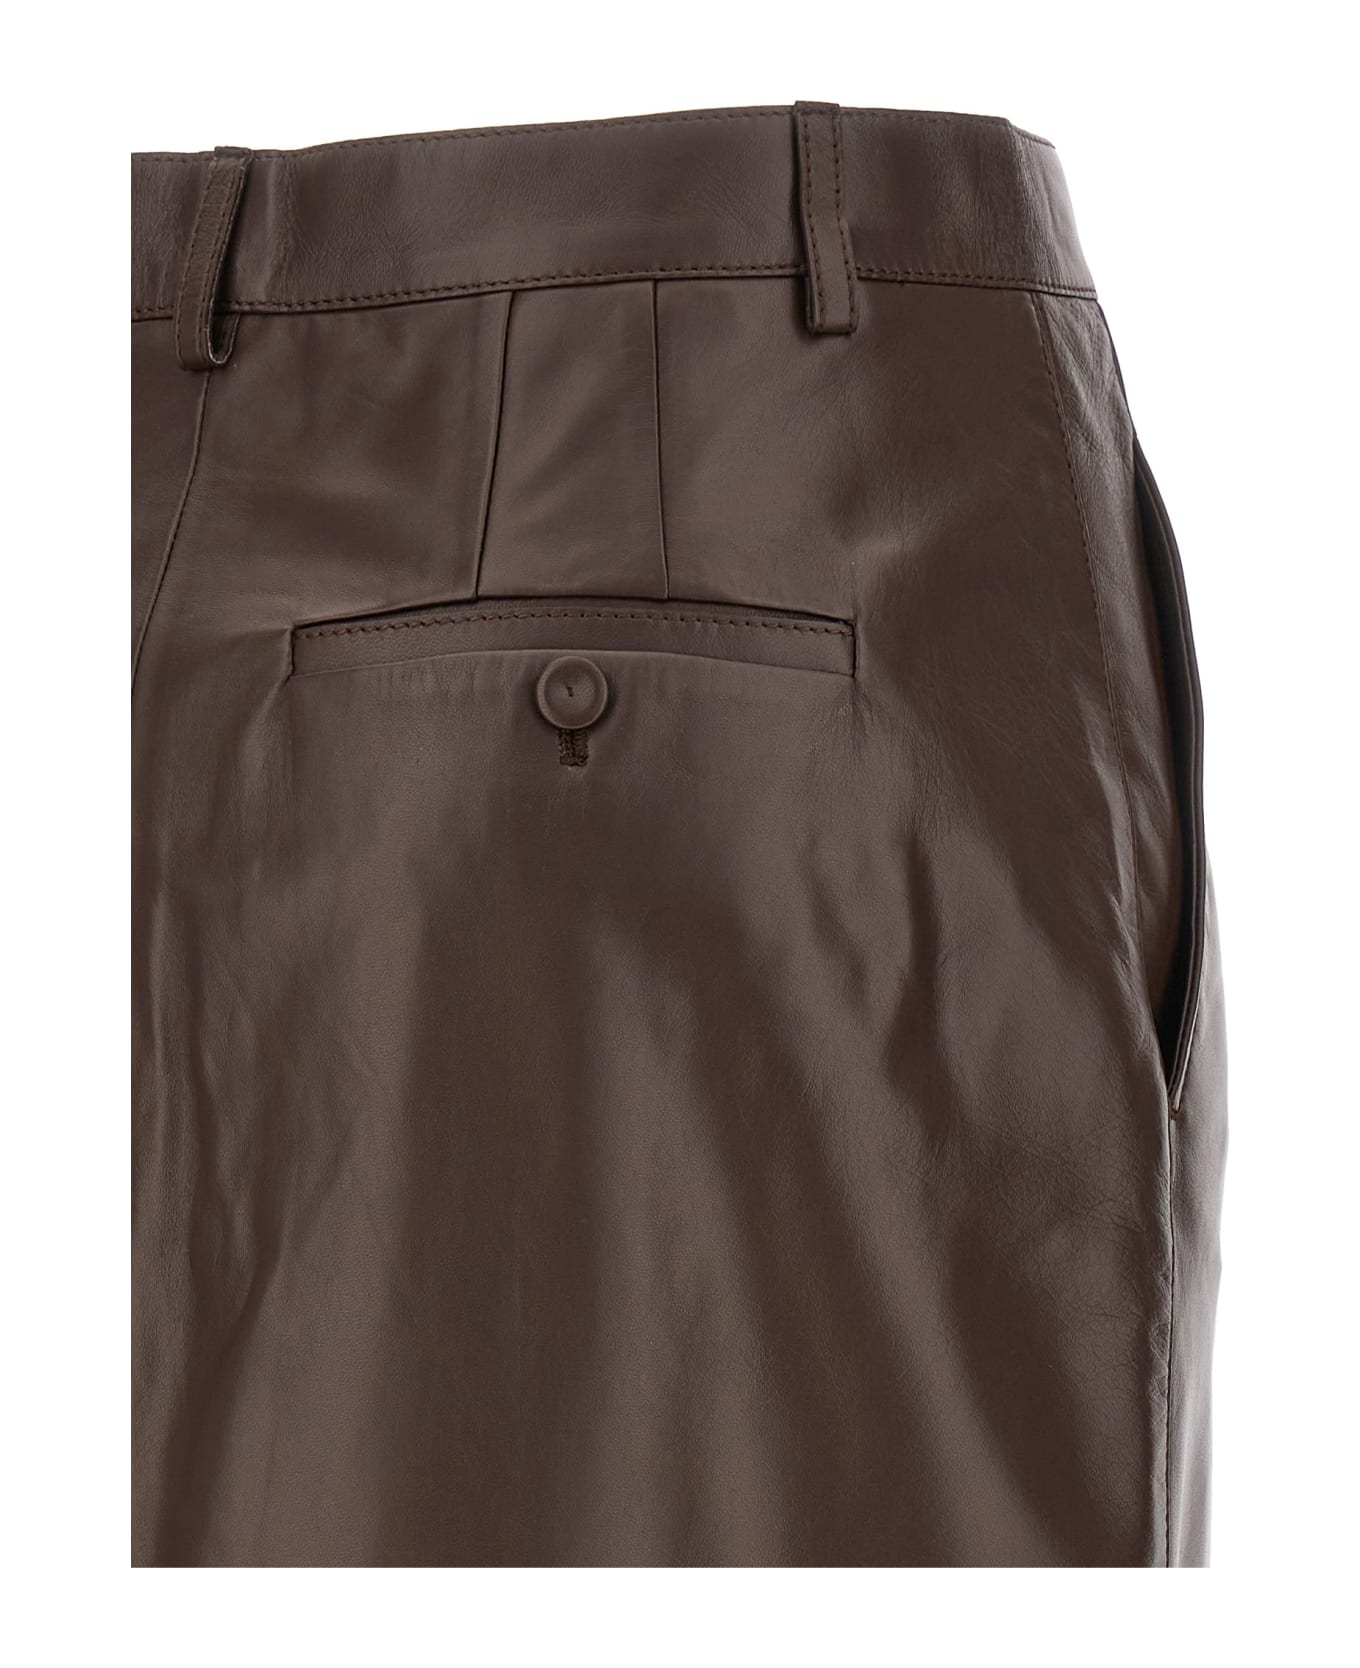 Lanvin Leather Skirt - Brown スカート